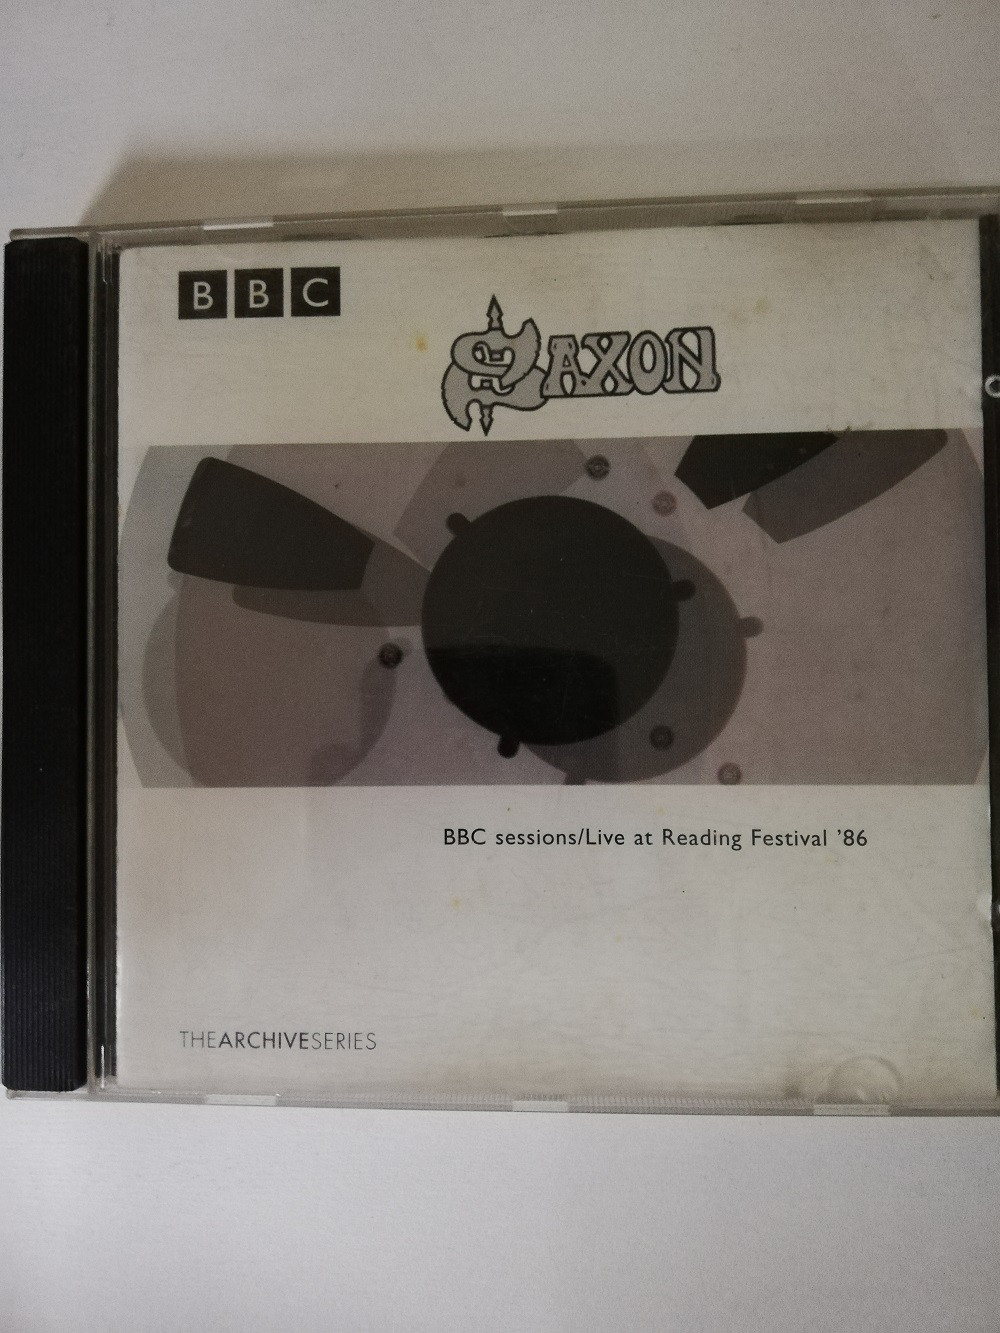 Imagen CD SAXON - BBC SESSIONS/LIVE AT READING FESTIVAL ´86 1